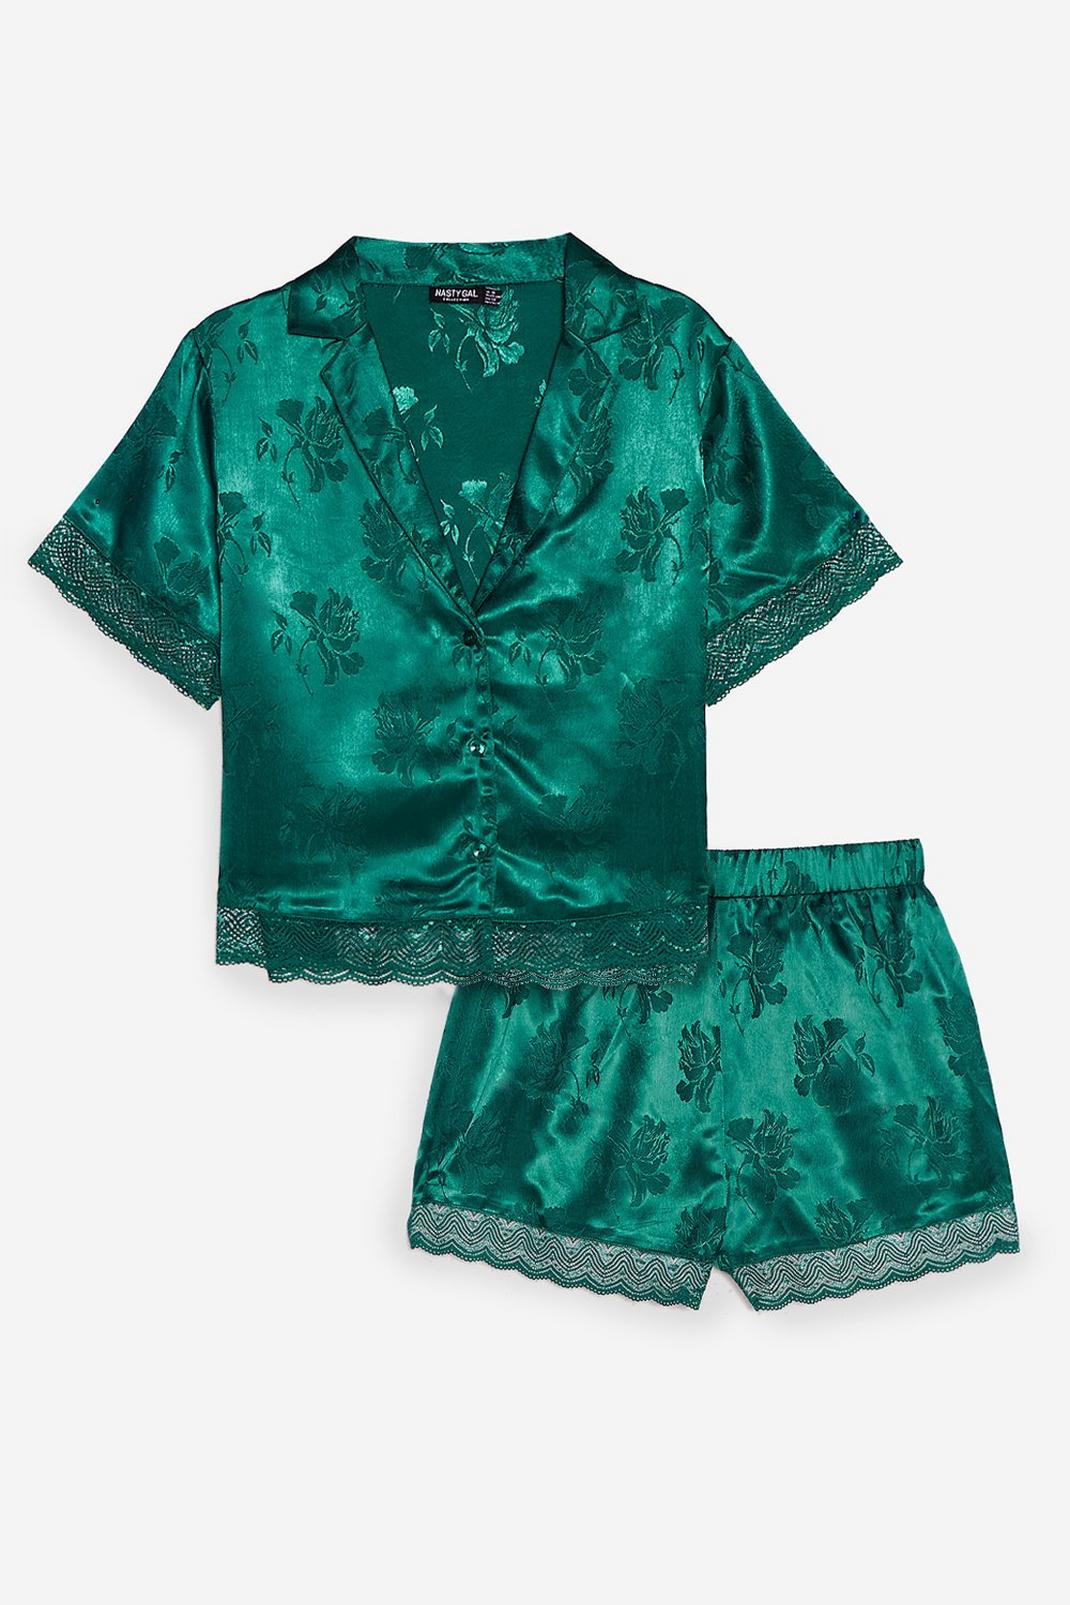 Emerald Lights Out Jacquard Shirt and Short Pyjama Set image number 1